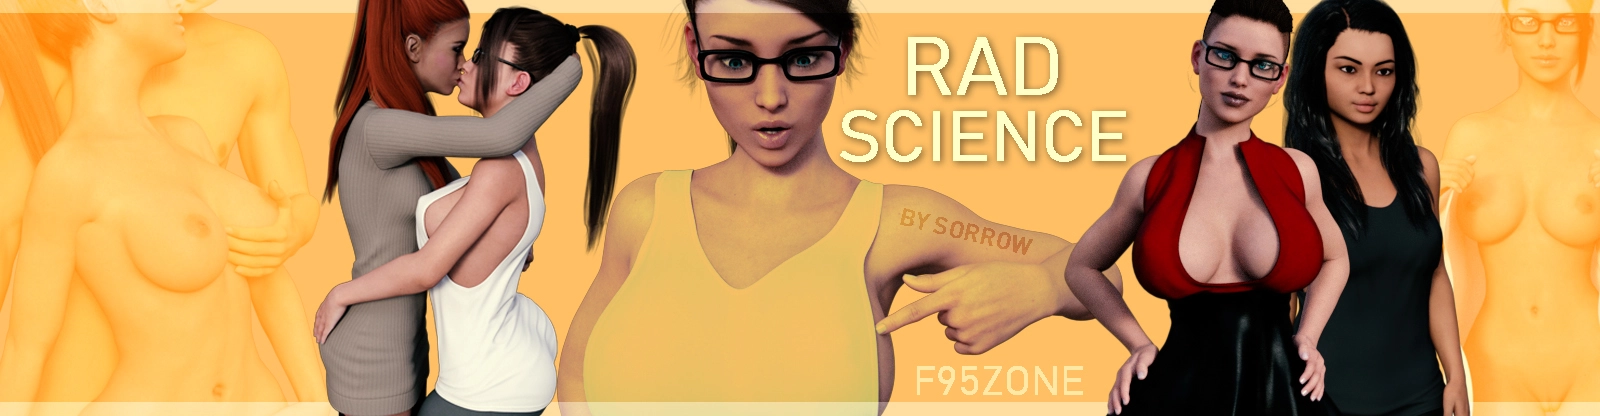 Rad Science [v0.6] main image